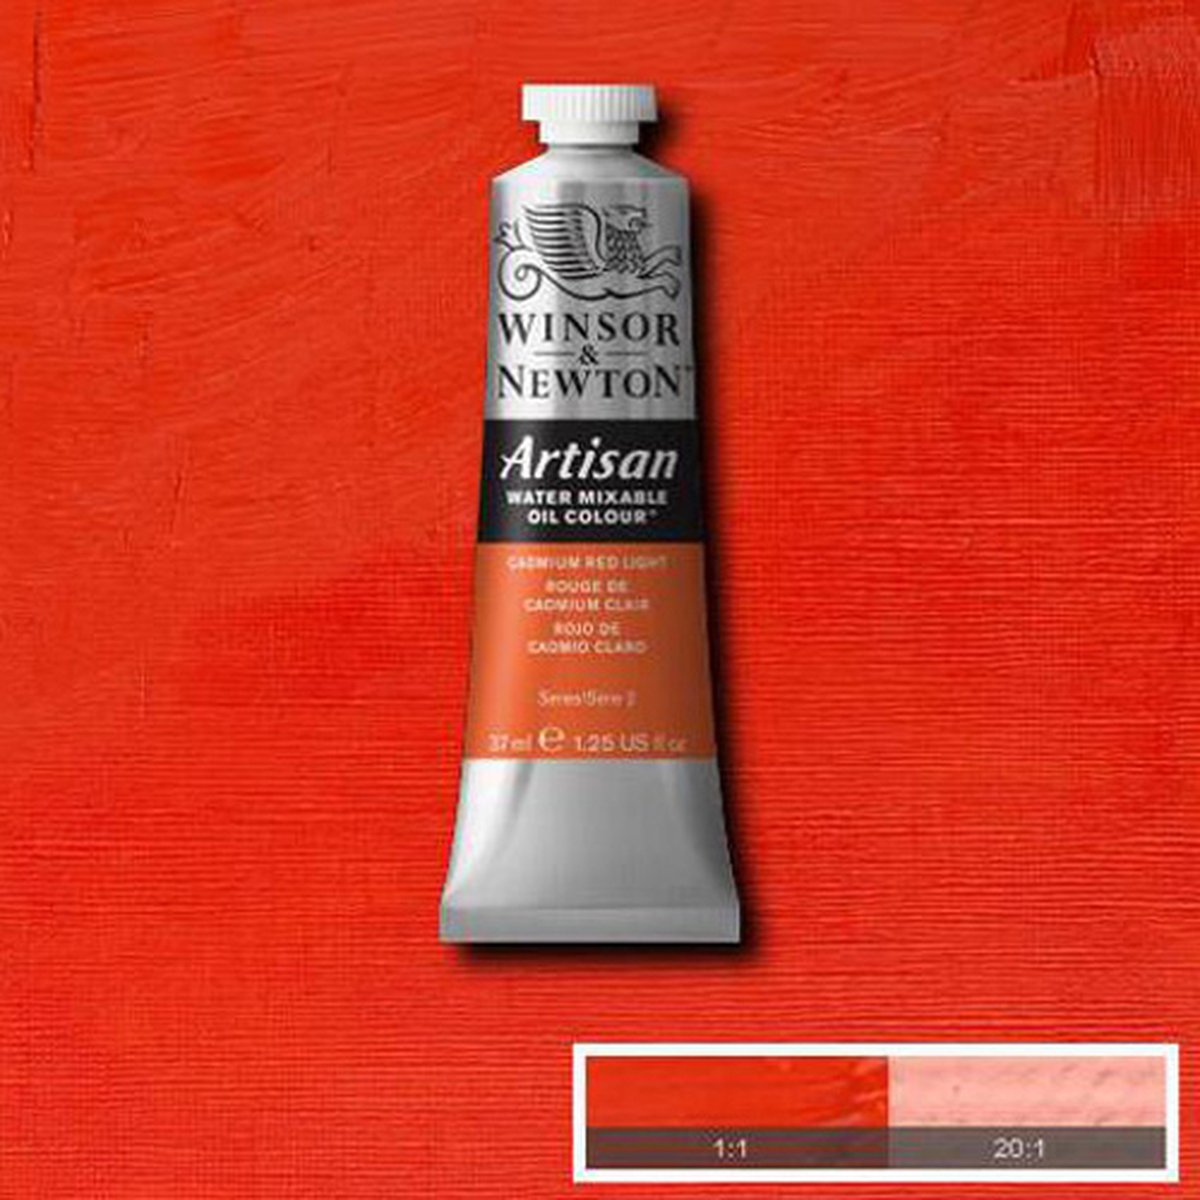 Winsor & Newton Artisan Water Mixable Oil Colour Cadmium Red Light 100 37ml